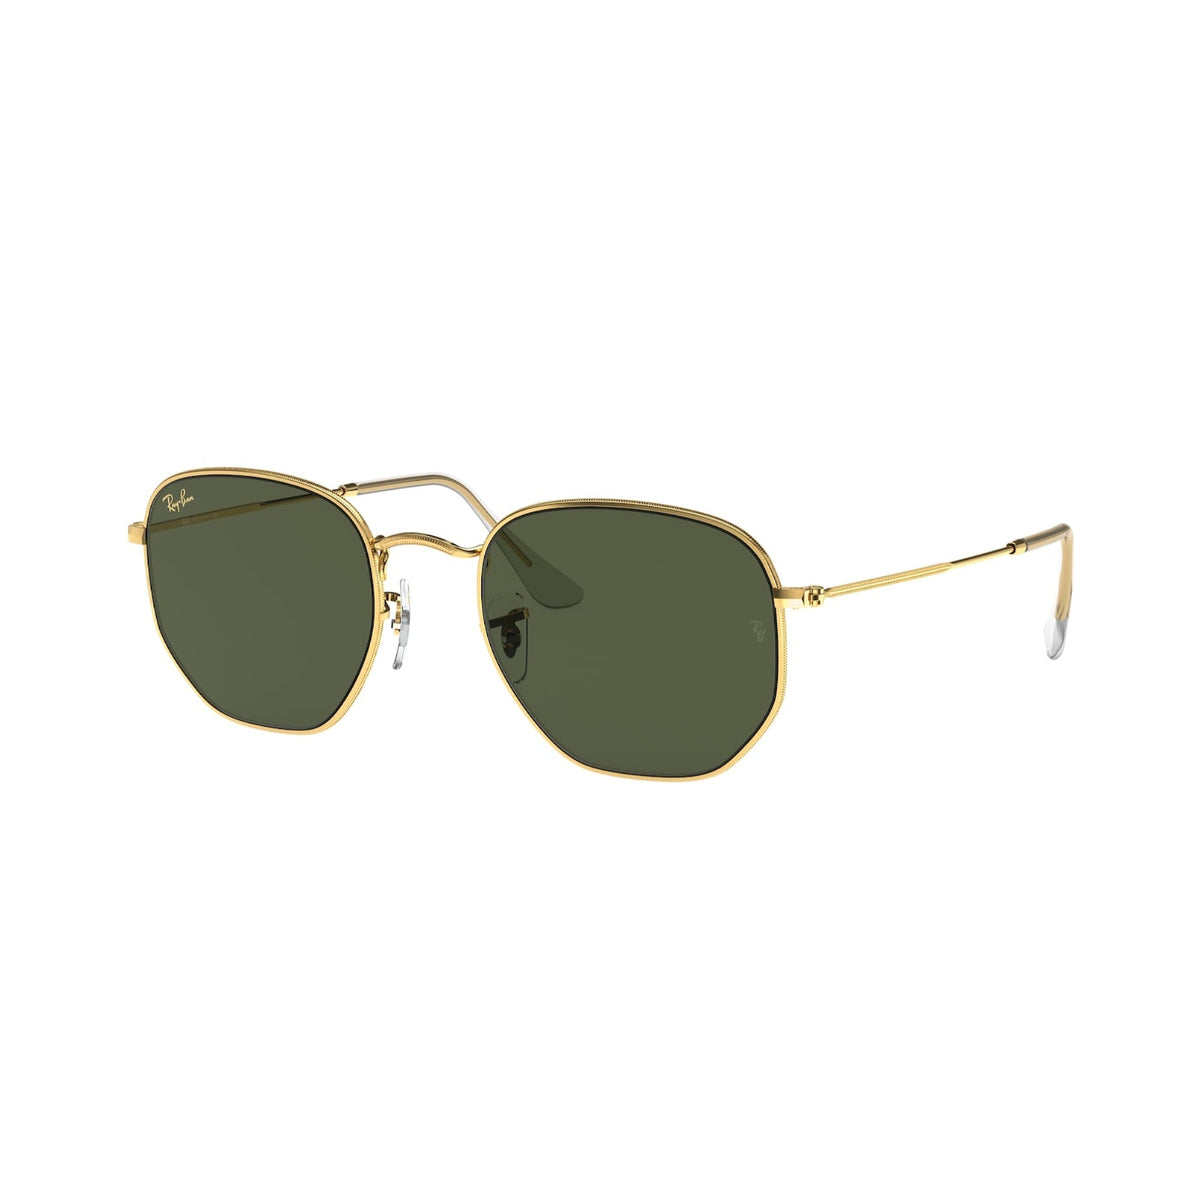 Ray-Ban Unisex Sunglasses Hexagonal Gold G-15 Green Metal Metal  0RB3548 919631 54